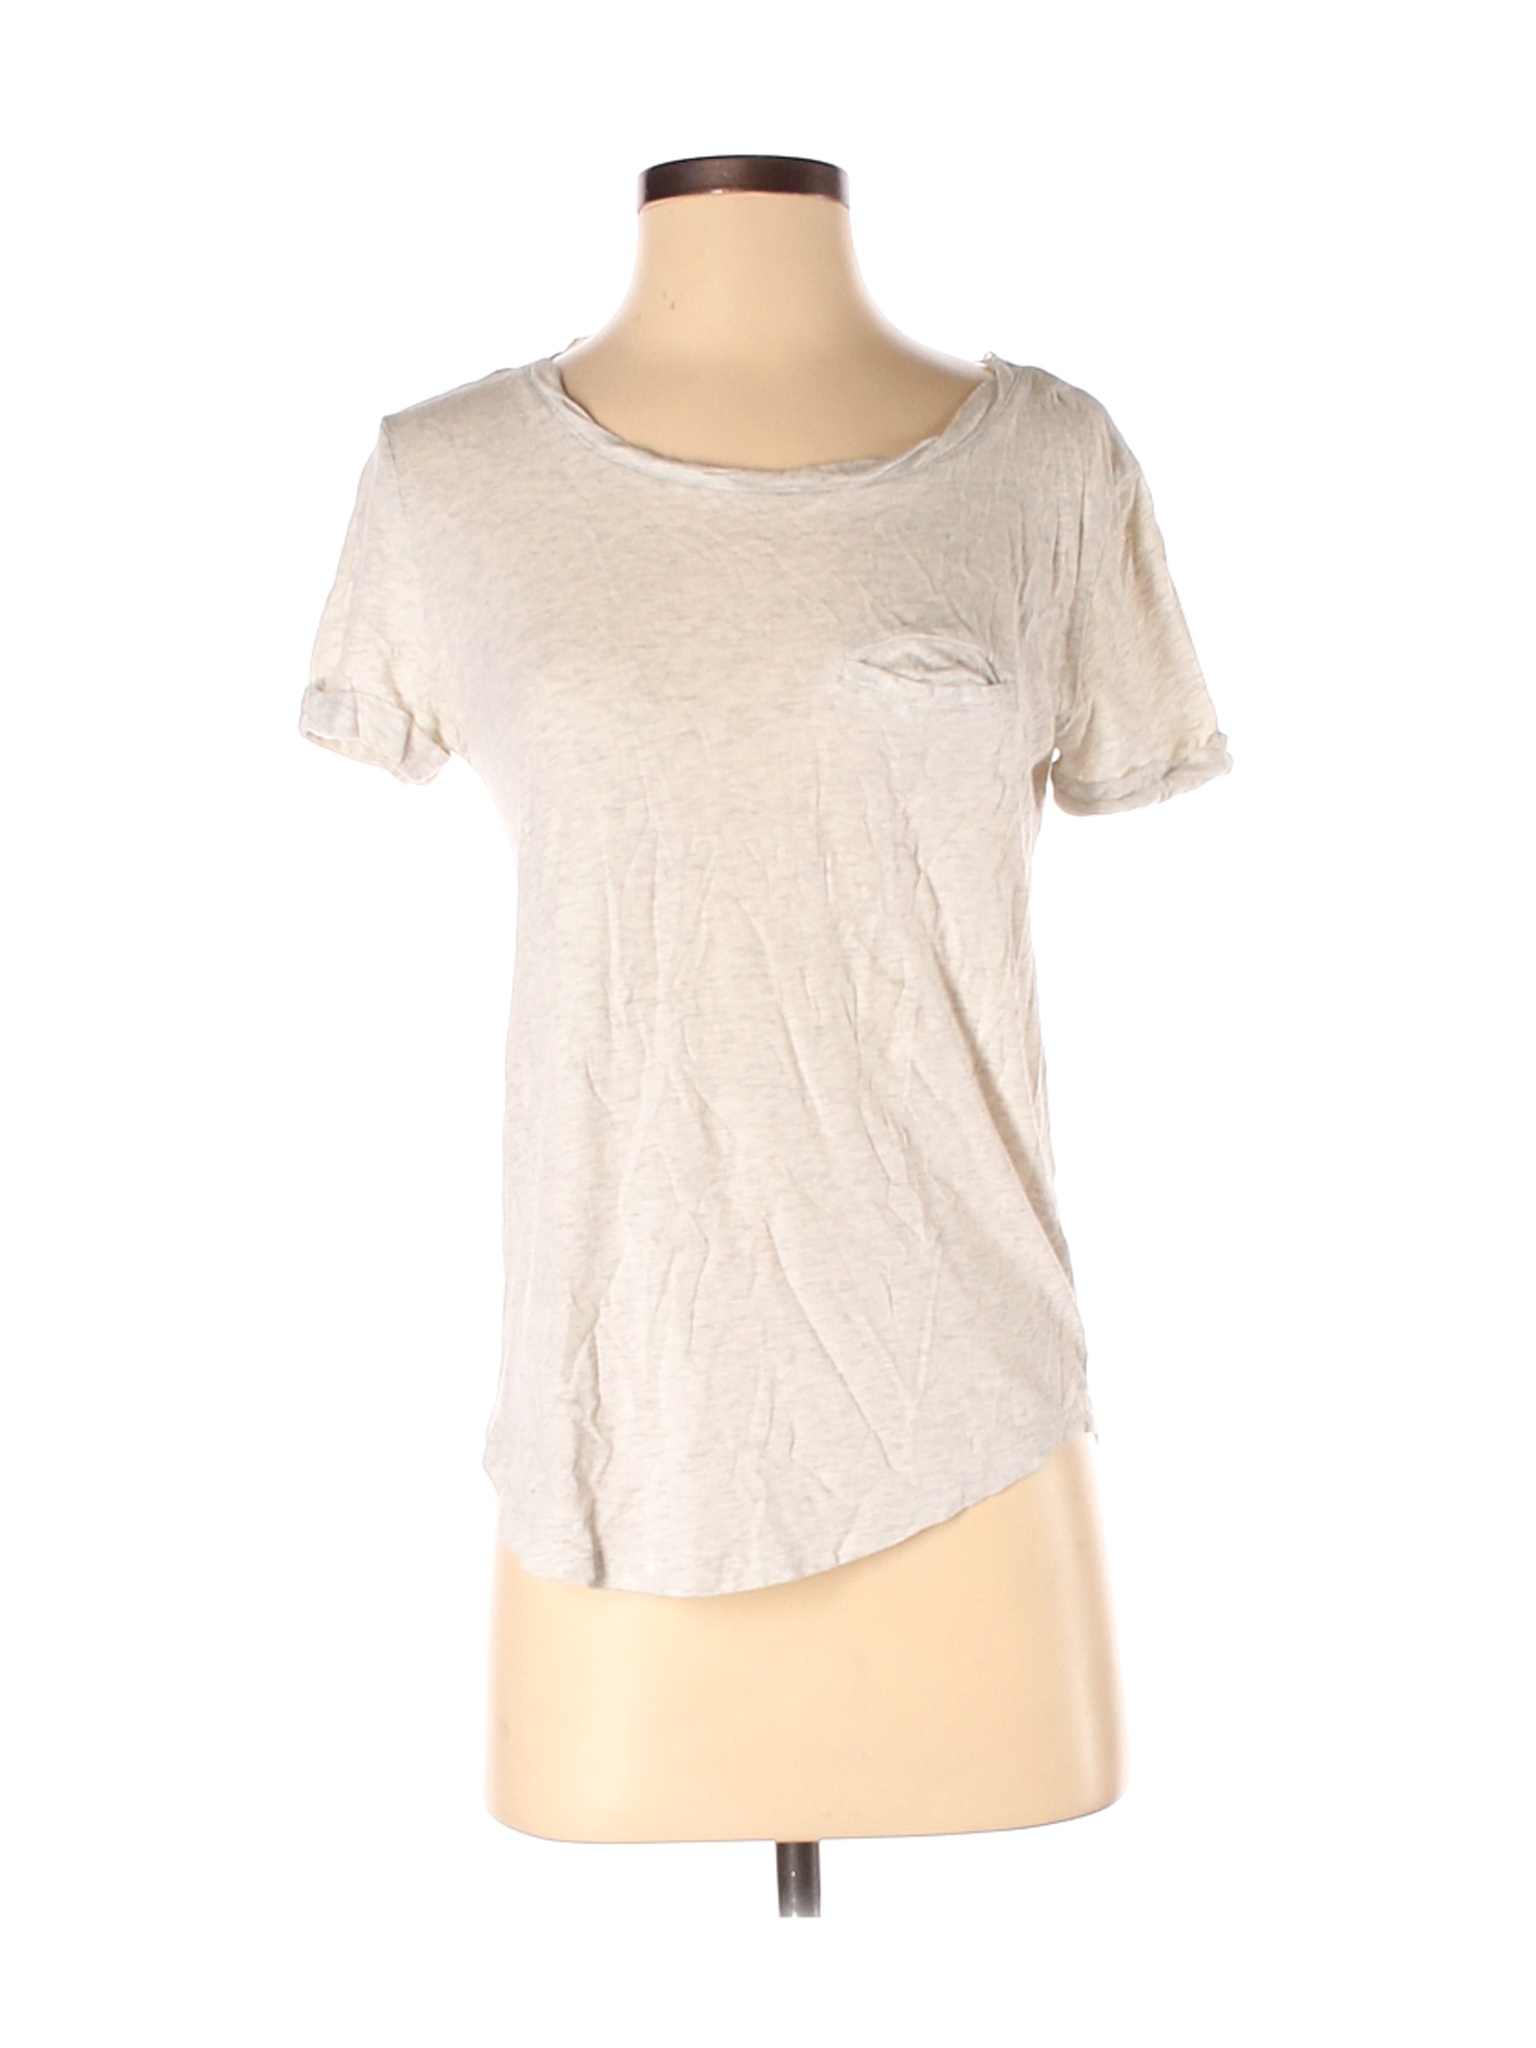 H&M Women Ivory Short Sleeve T-Shirt XS | eBay